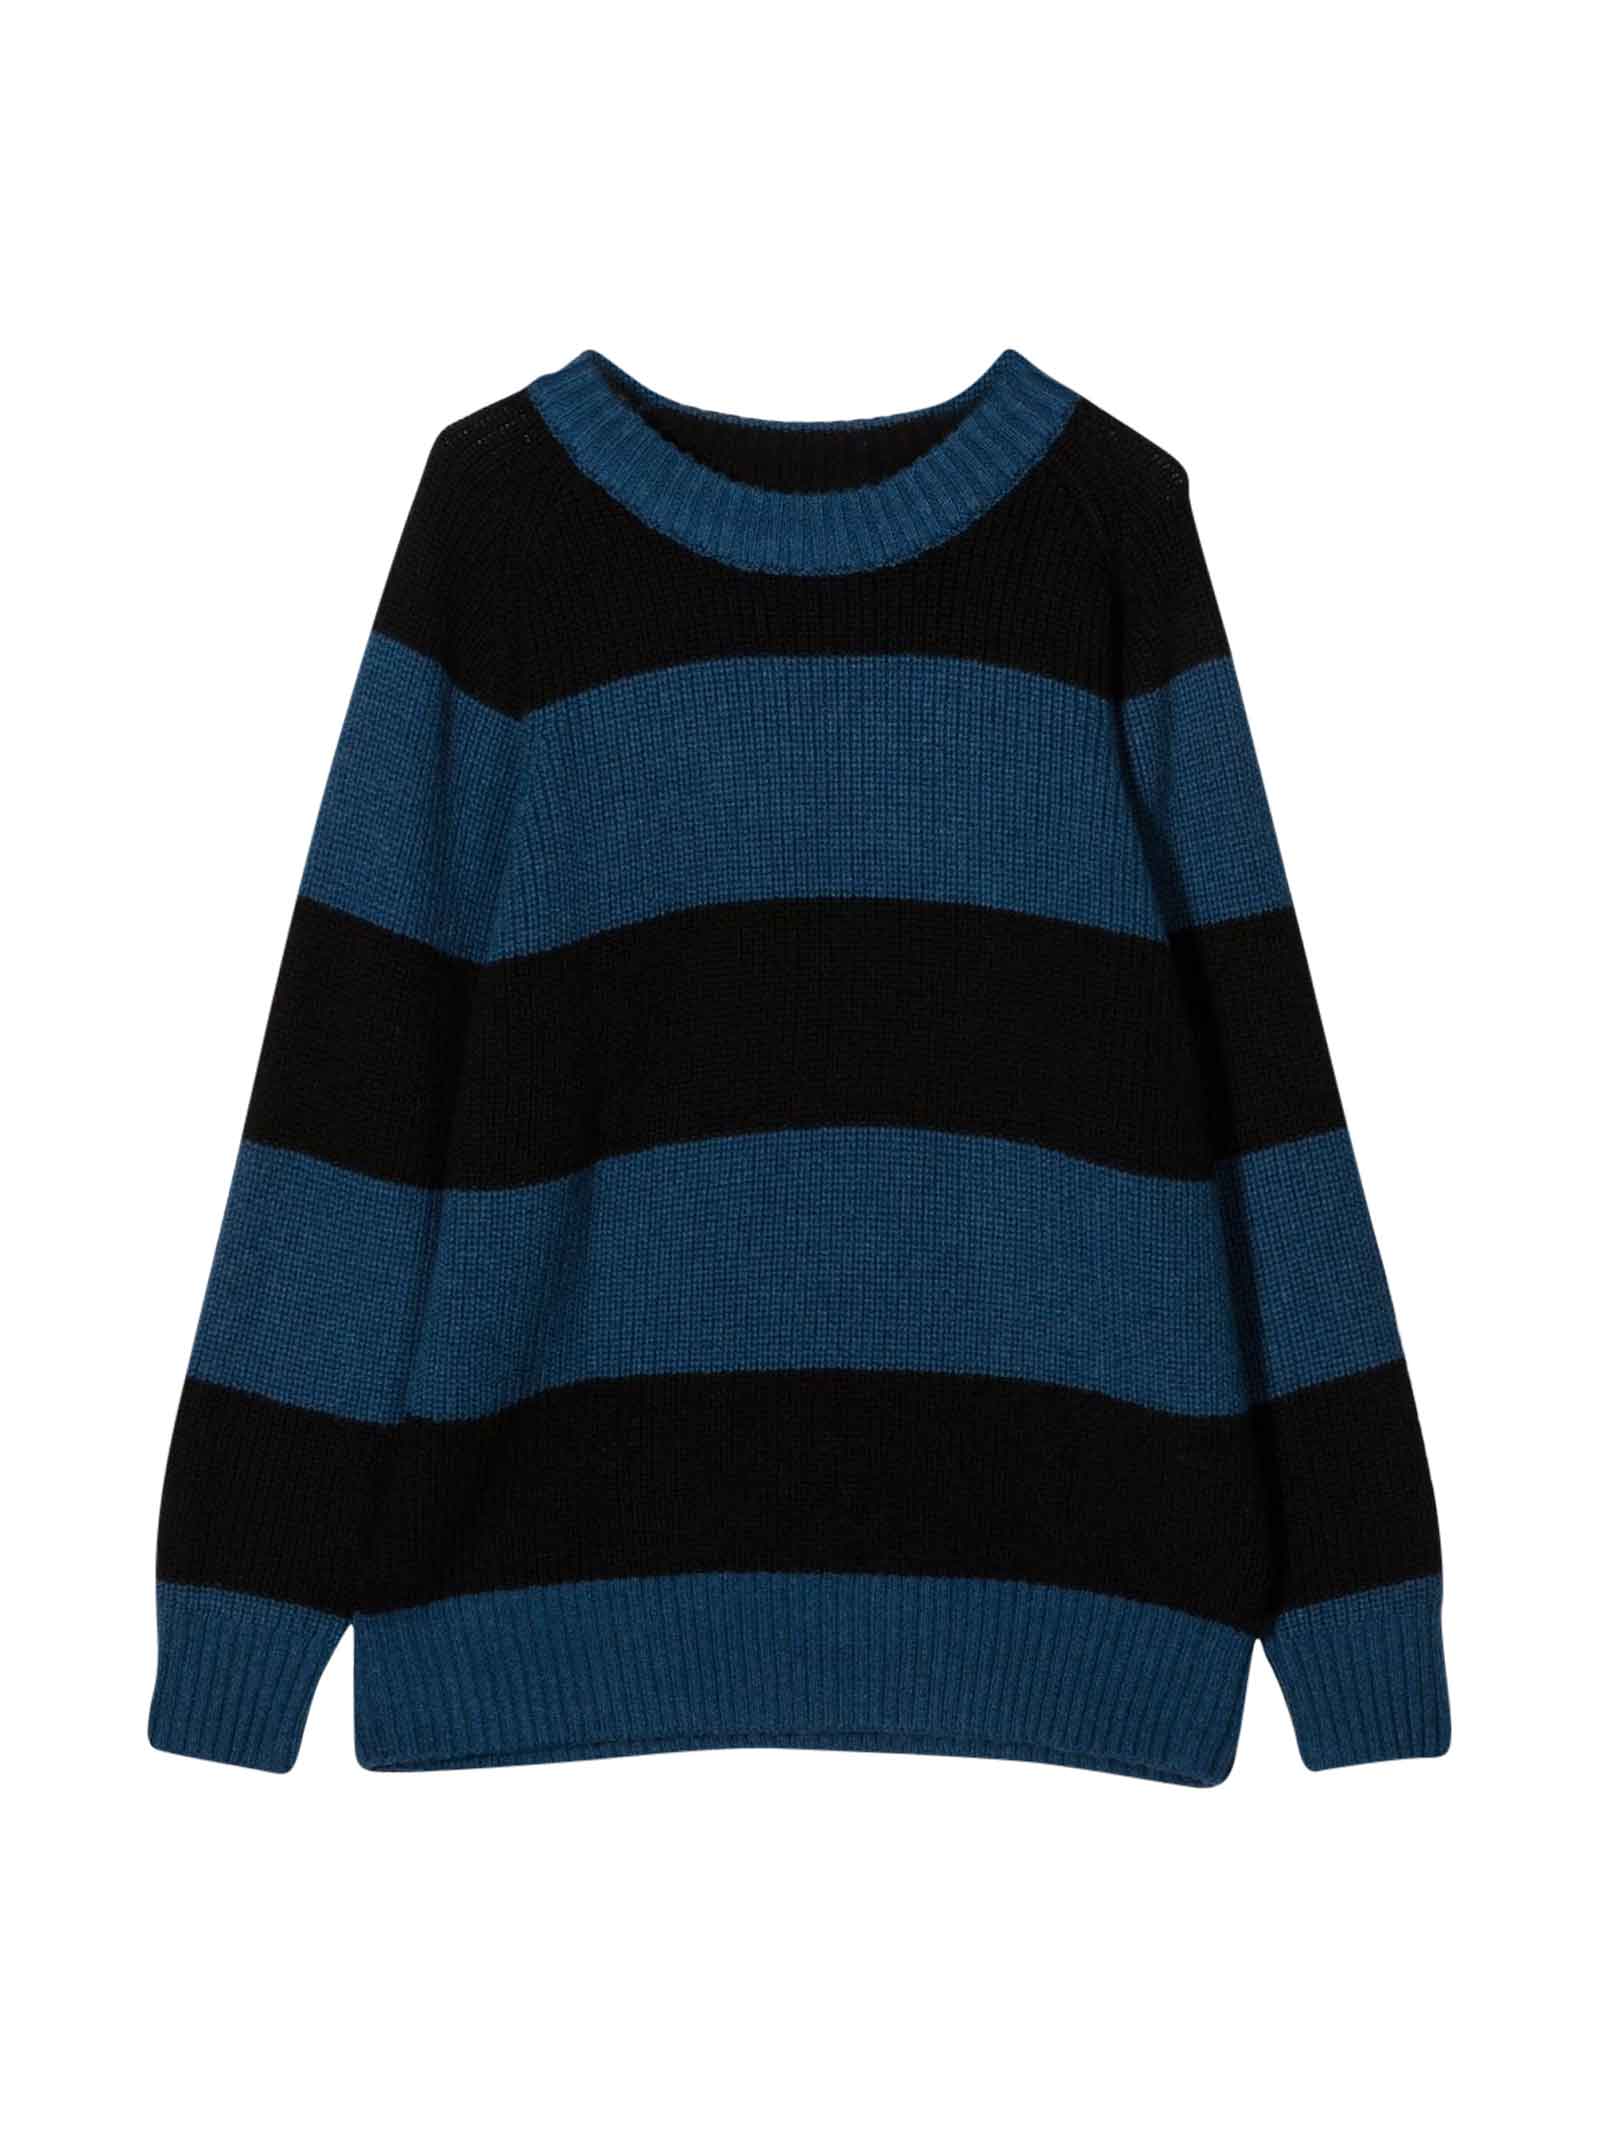 Molo Kids Black And Blue Striped Sweater